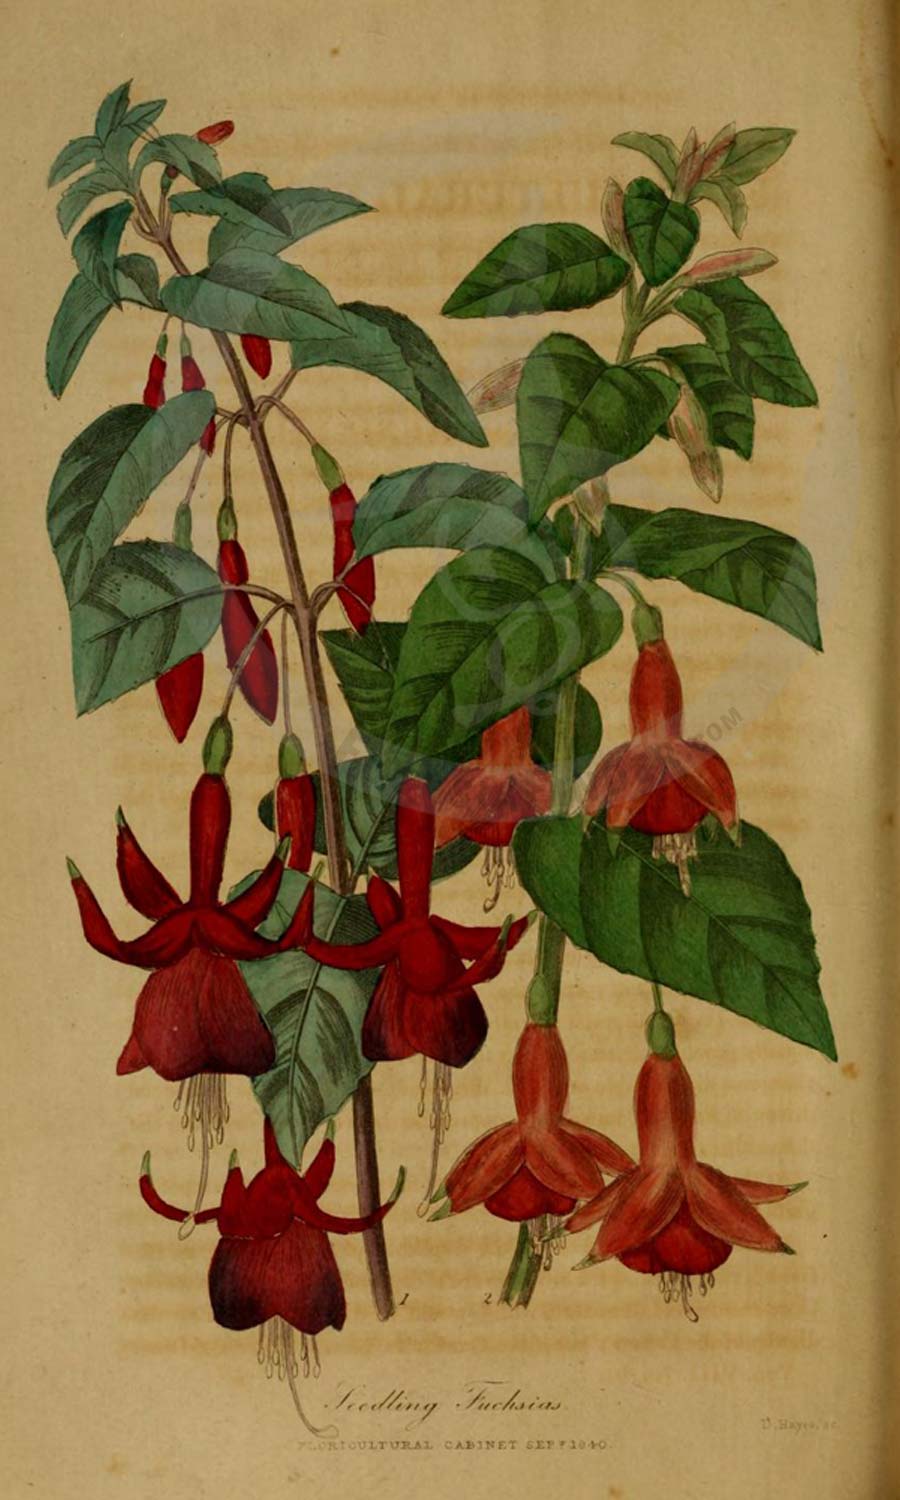 Floricultural Cabinet & Florist's Magazine - FuchsiaFinder